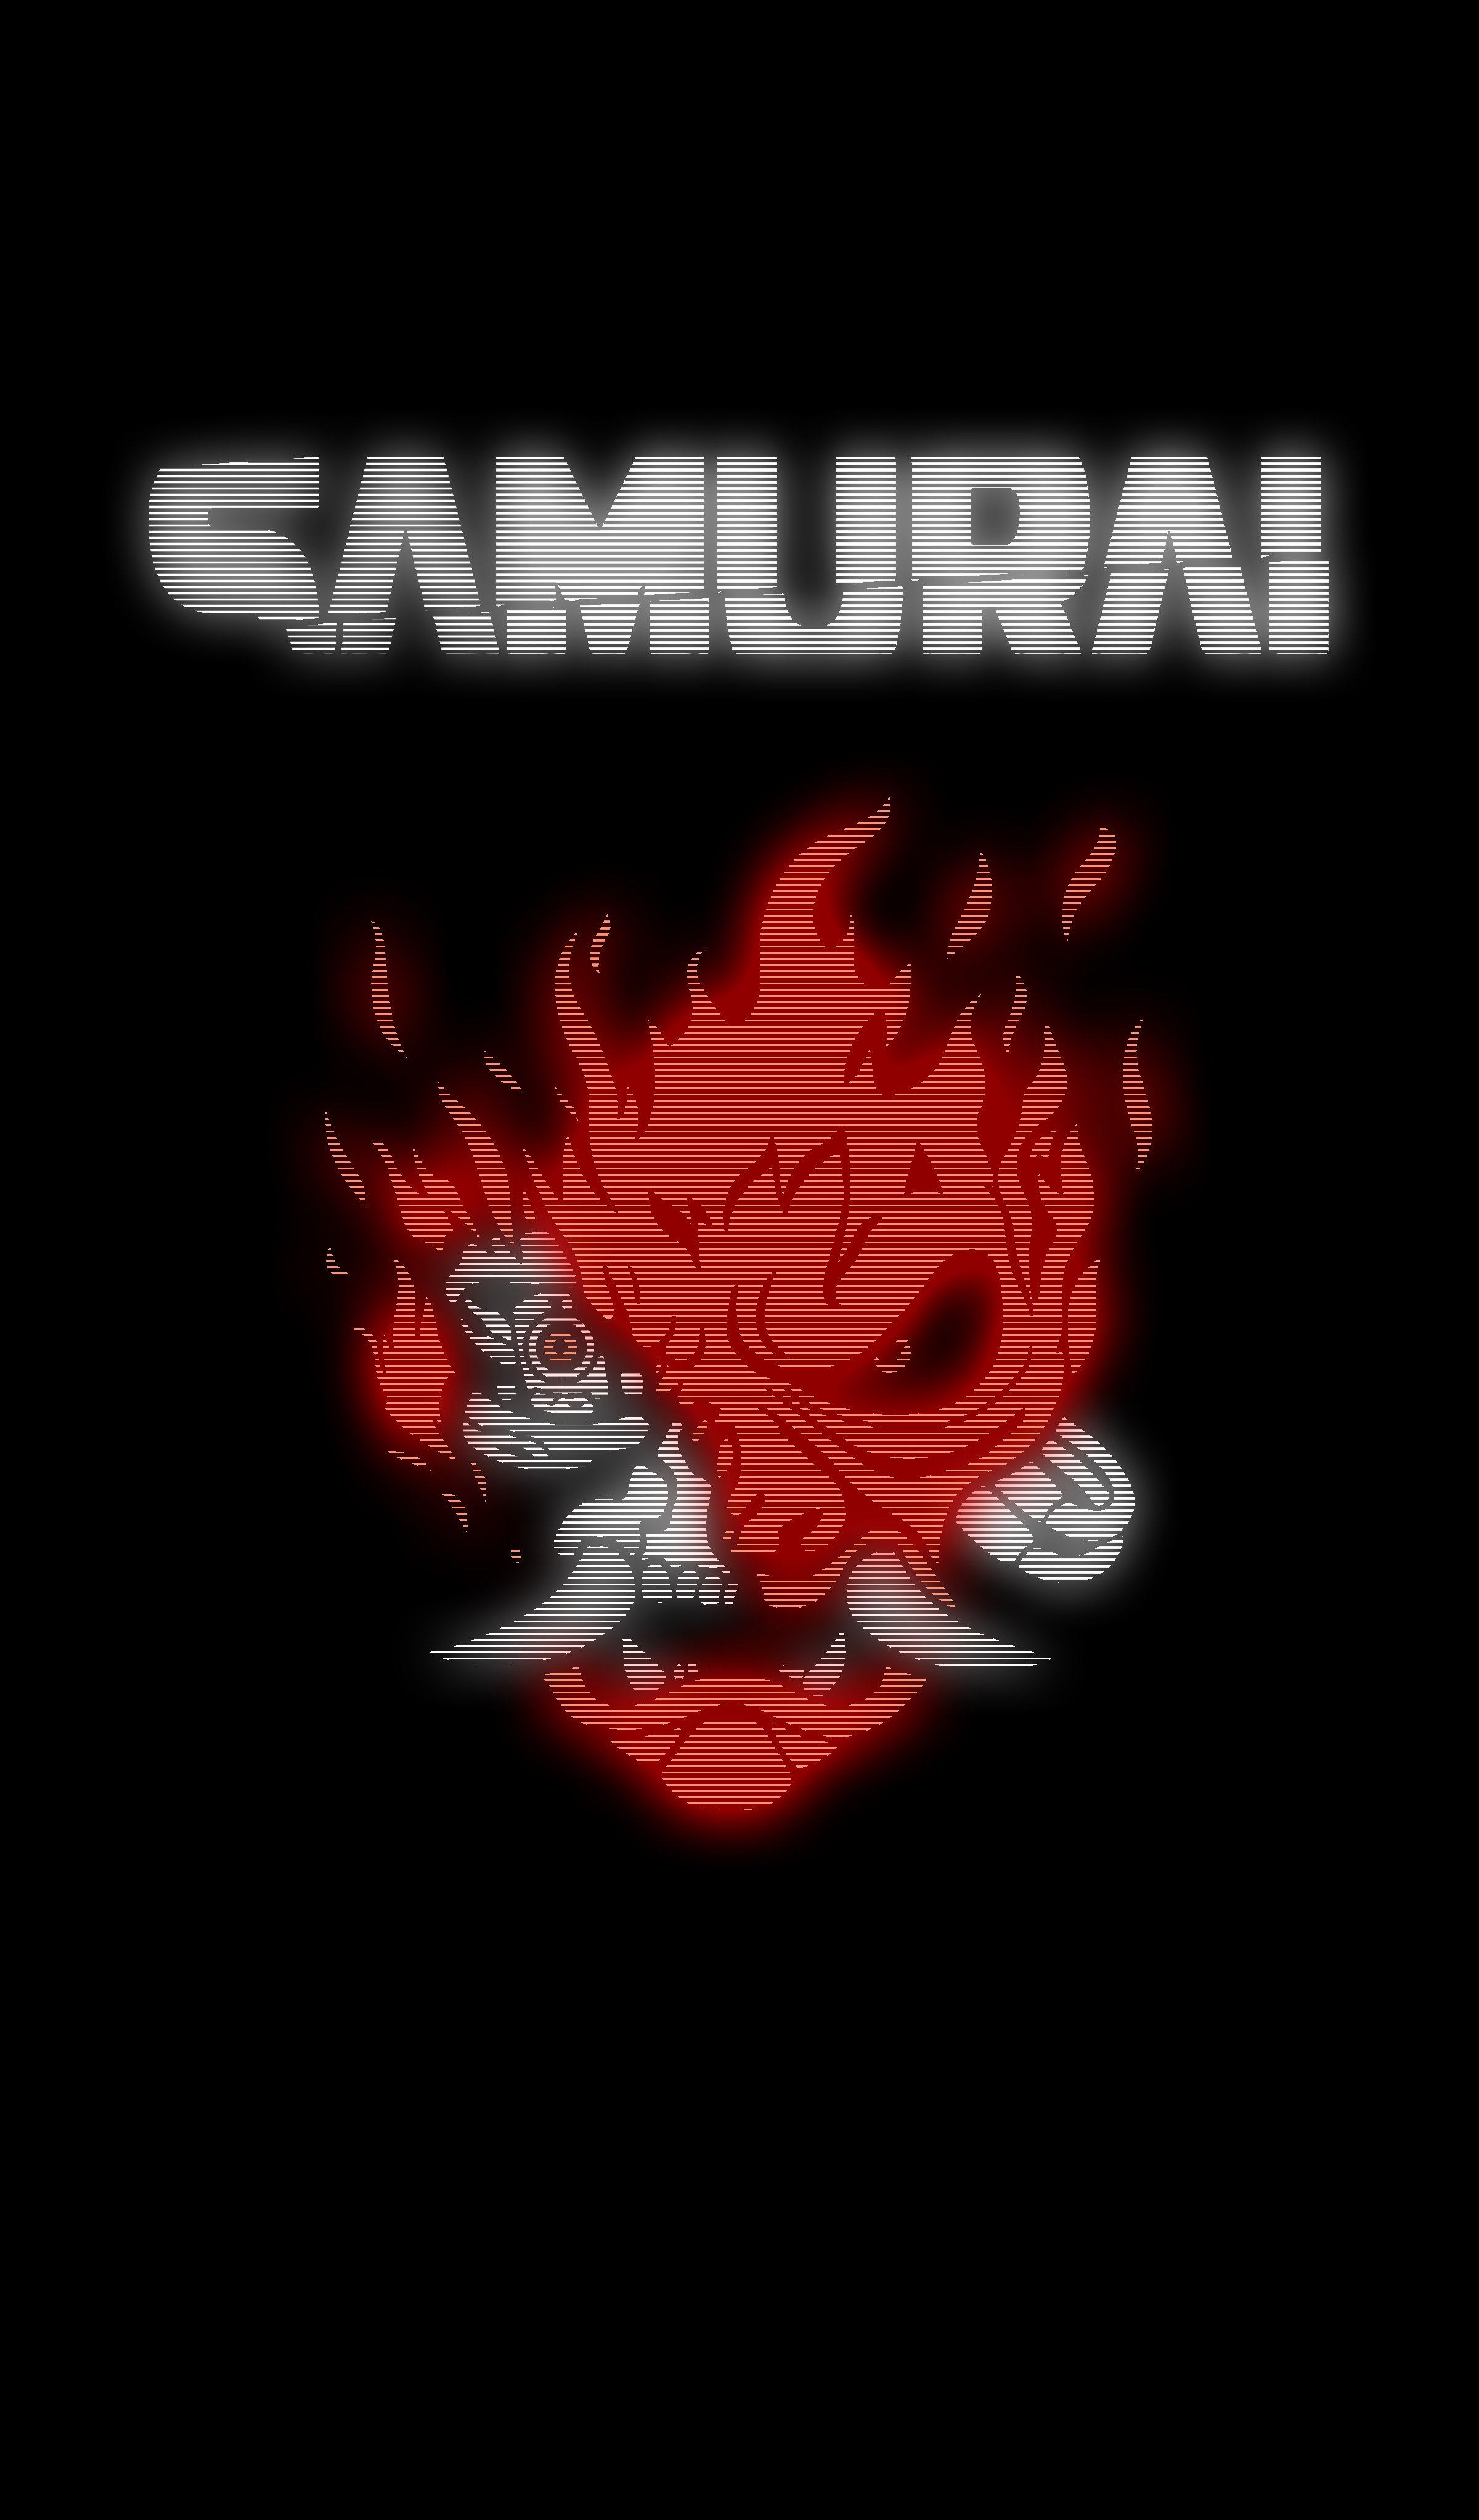 Made some custom Samurai mobile wallpaper. The link to them